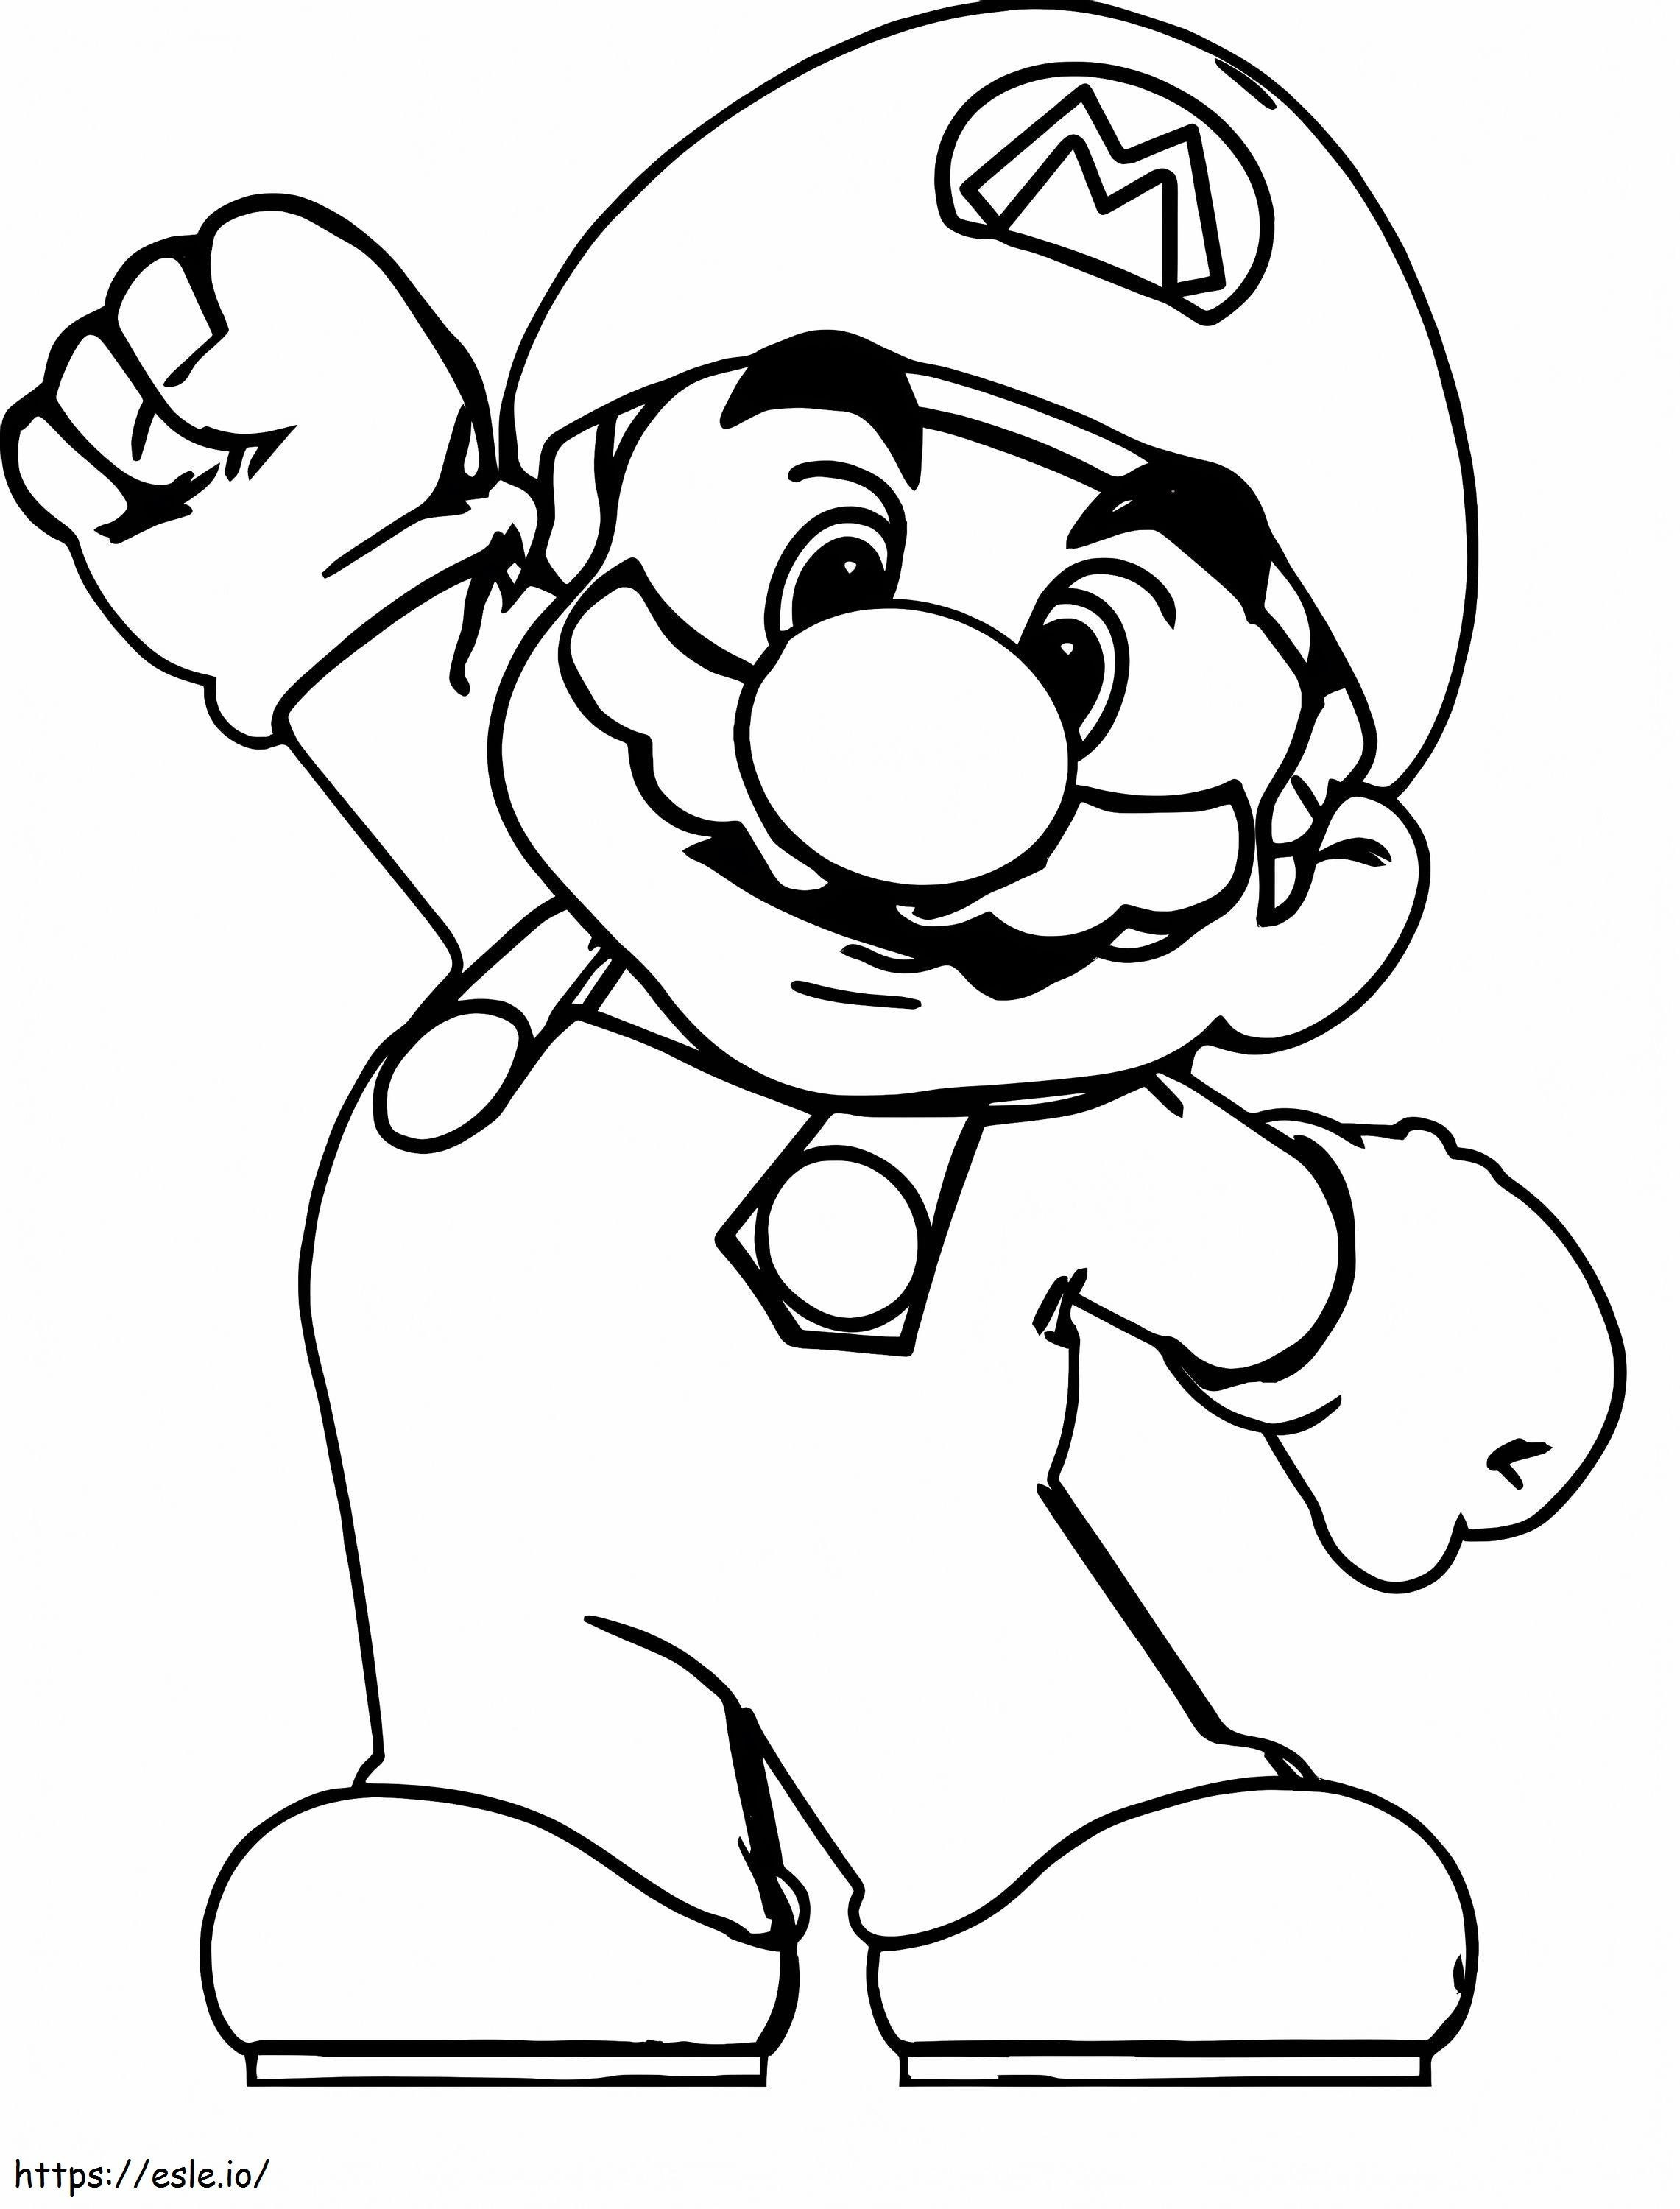 Coloriage Beau Mario à imprimer dessin